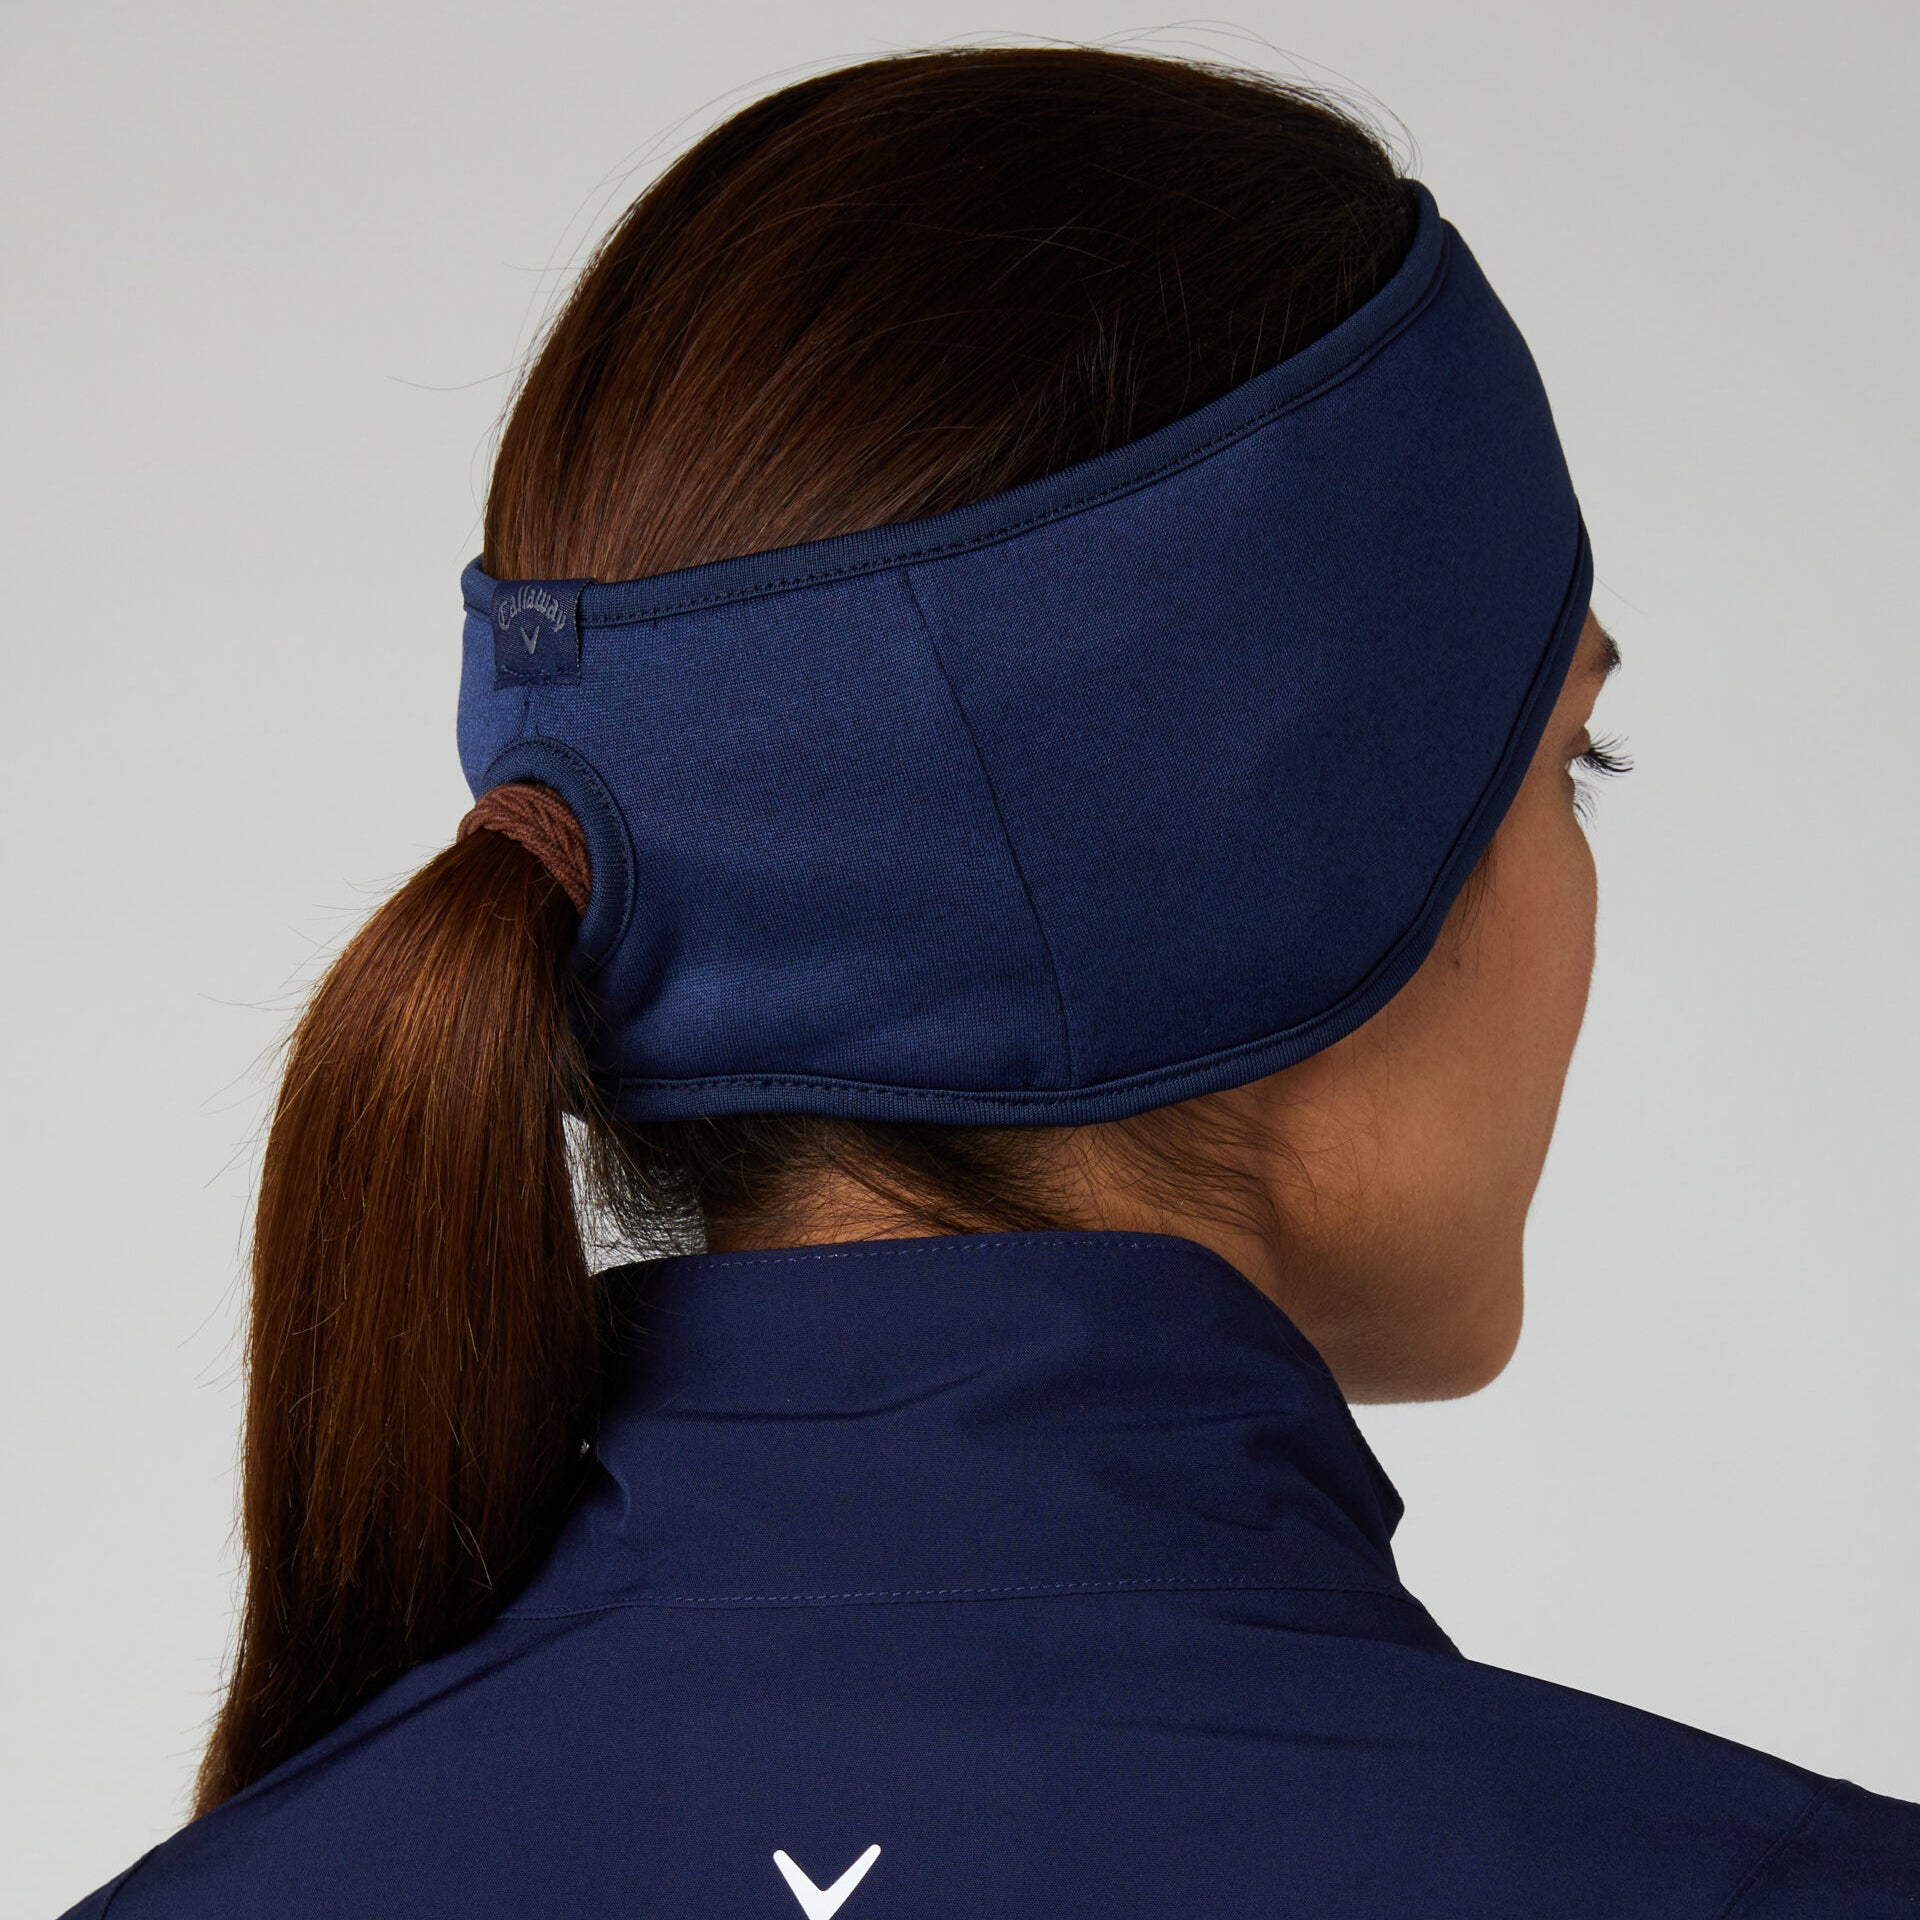 Callaway Ladies Fleece Lined Ponytail Headband in Navy Blue